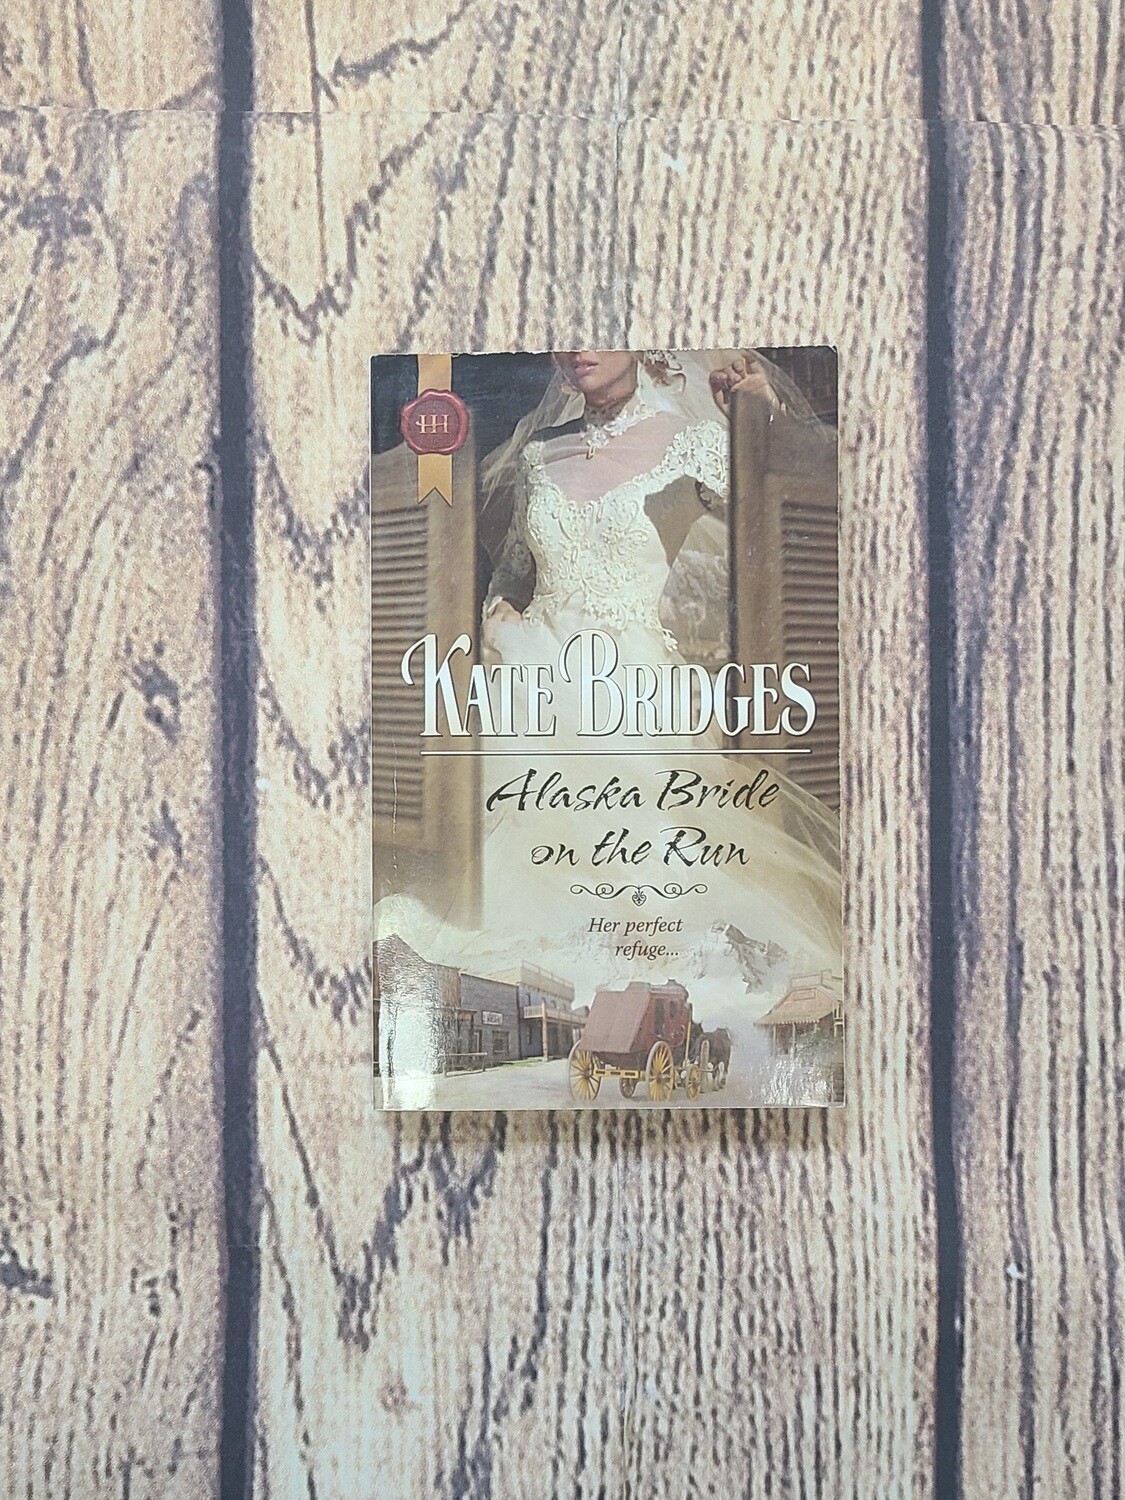 Alaska Bride on the Run by Kate Bridges